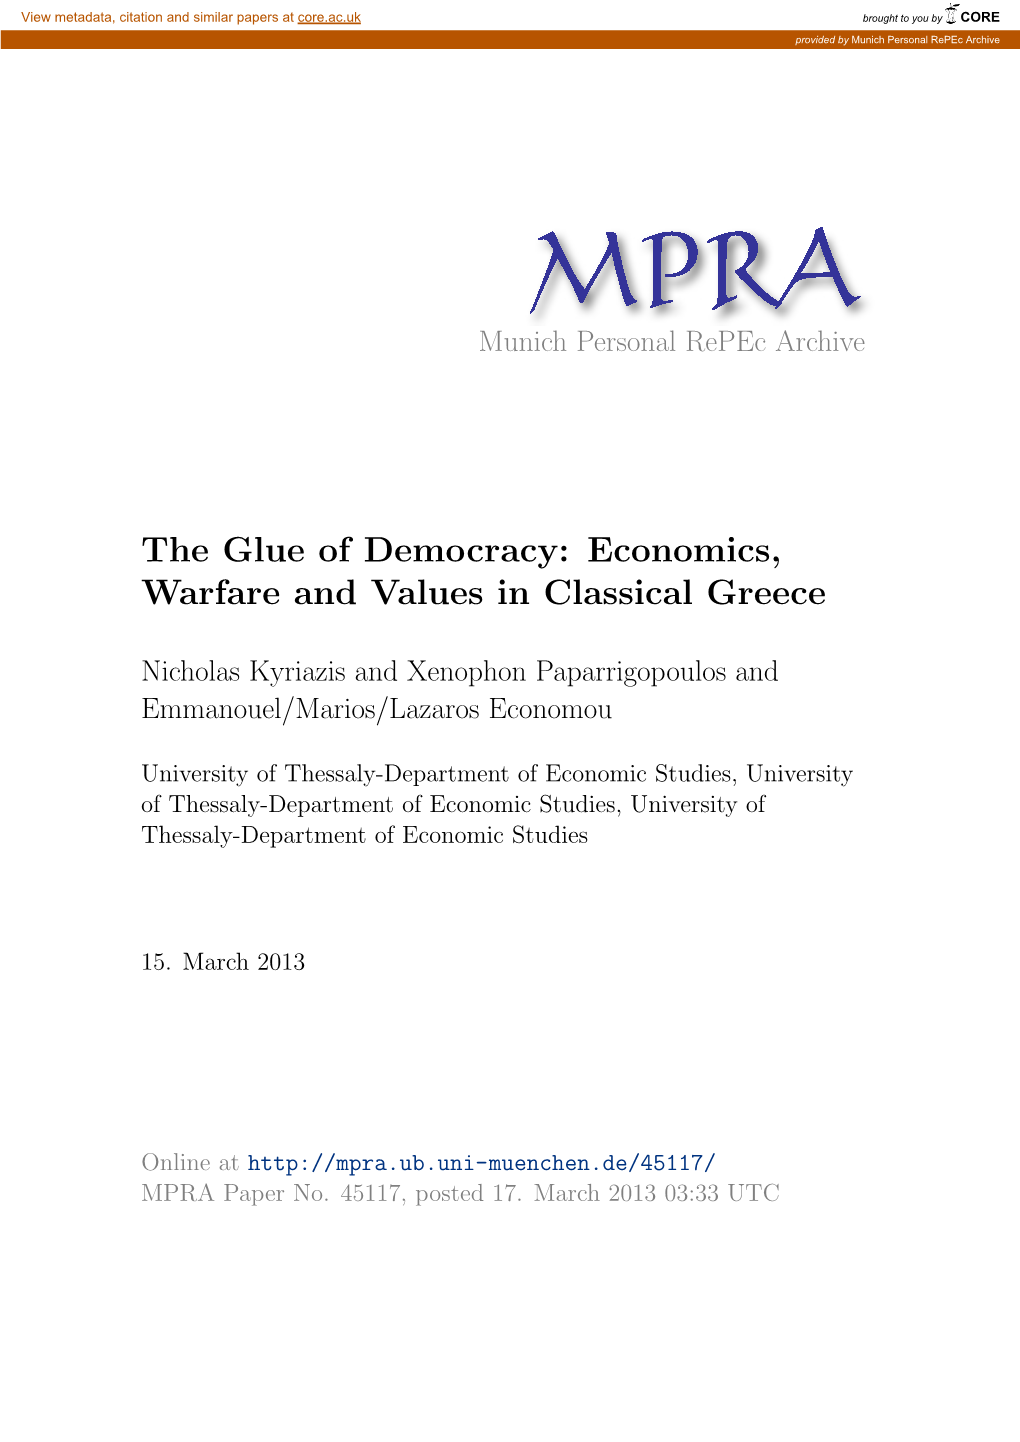 The Glue of Democracy: Economics, Warfare and Values in Classical Greece